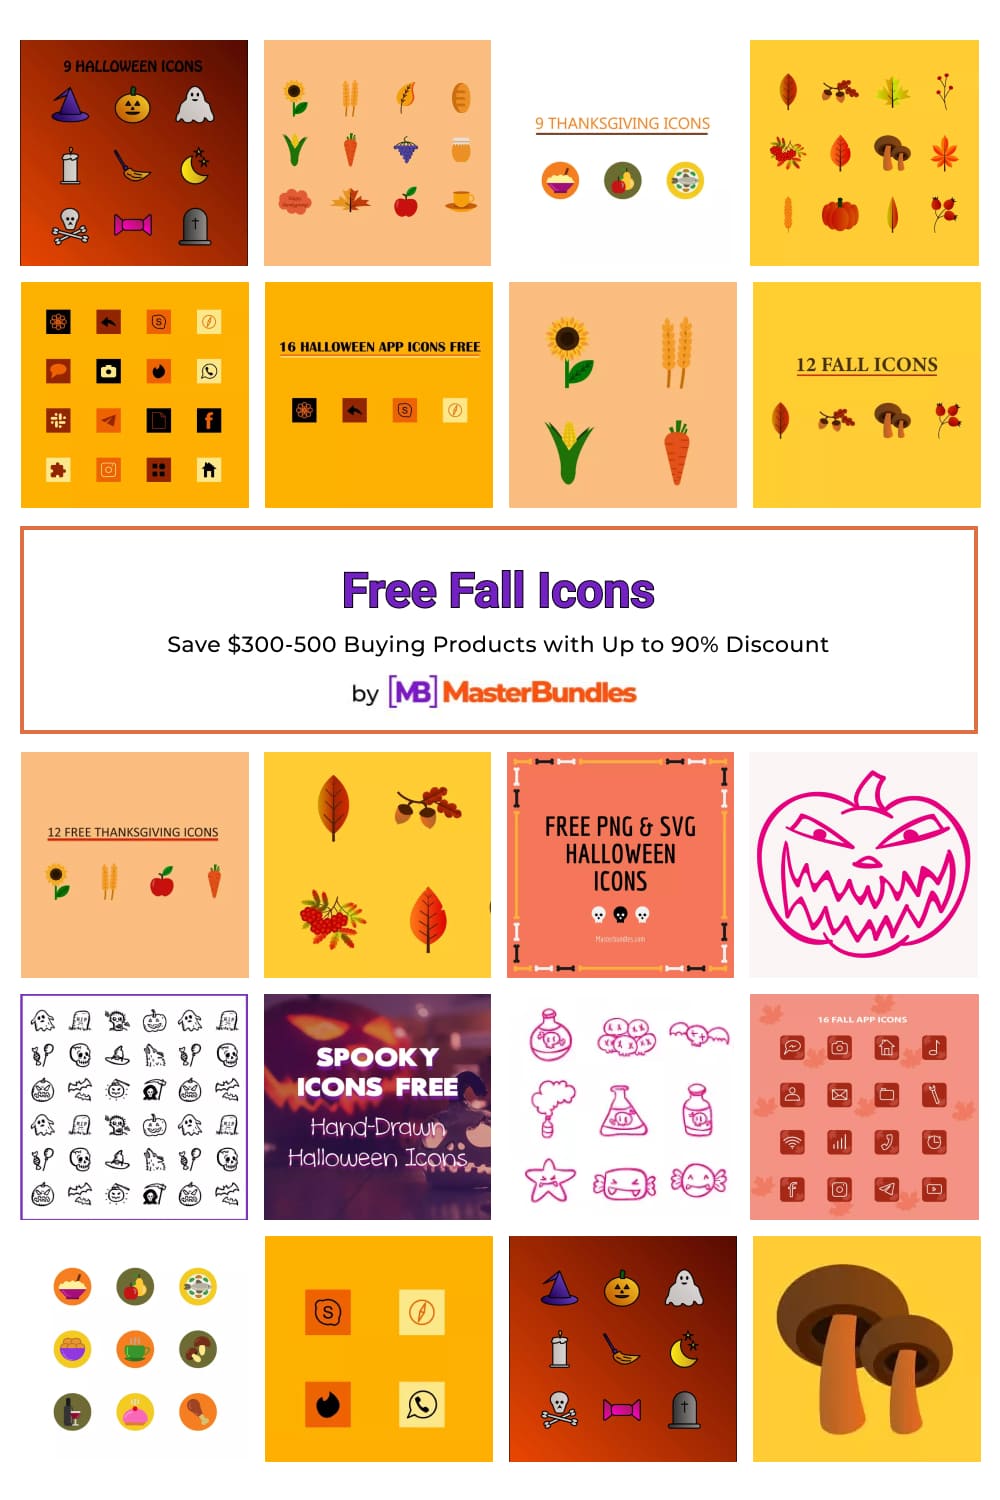 Free Fall Icons Pinterest image.